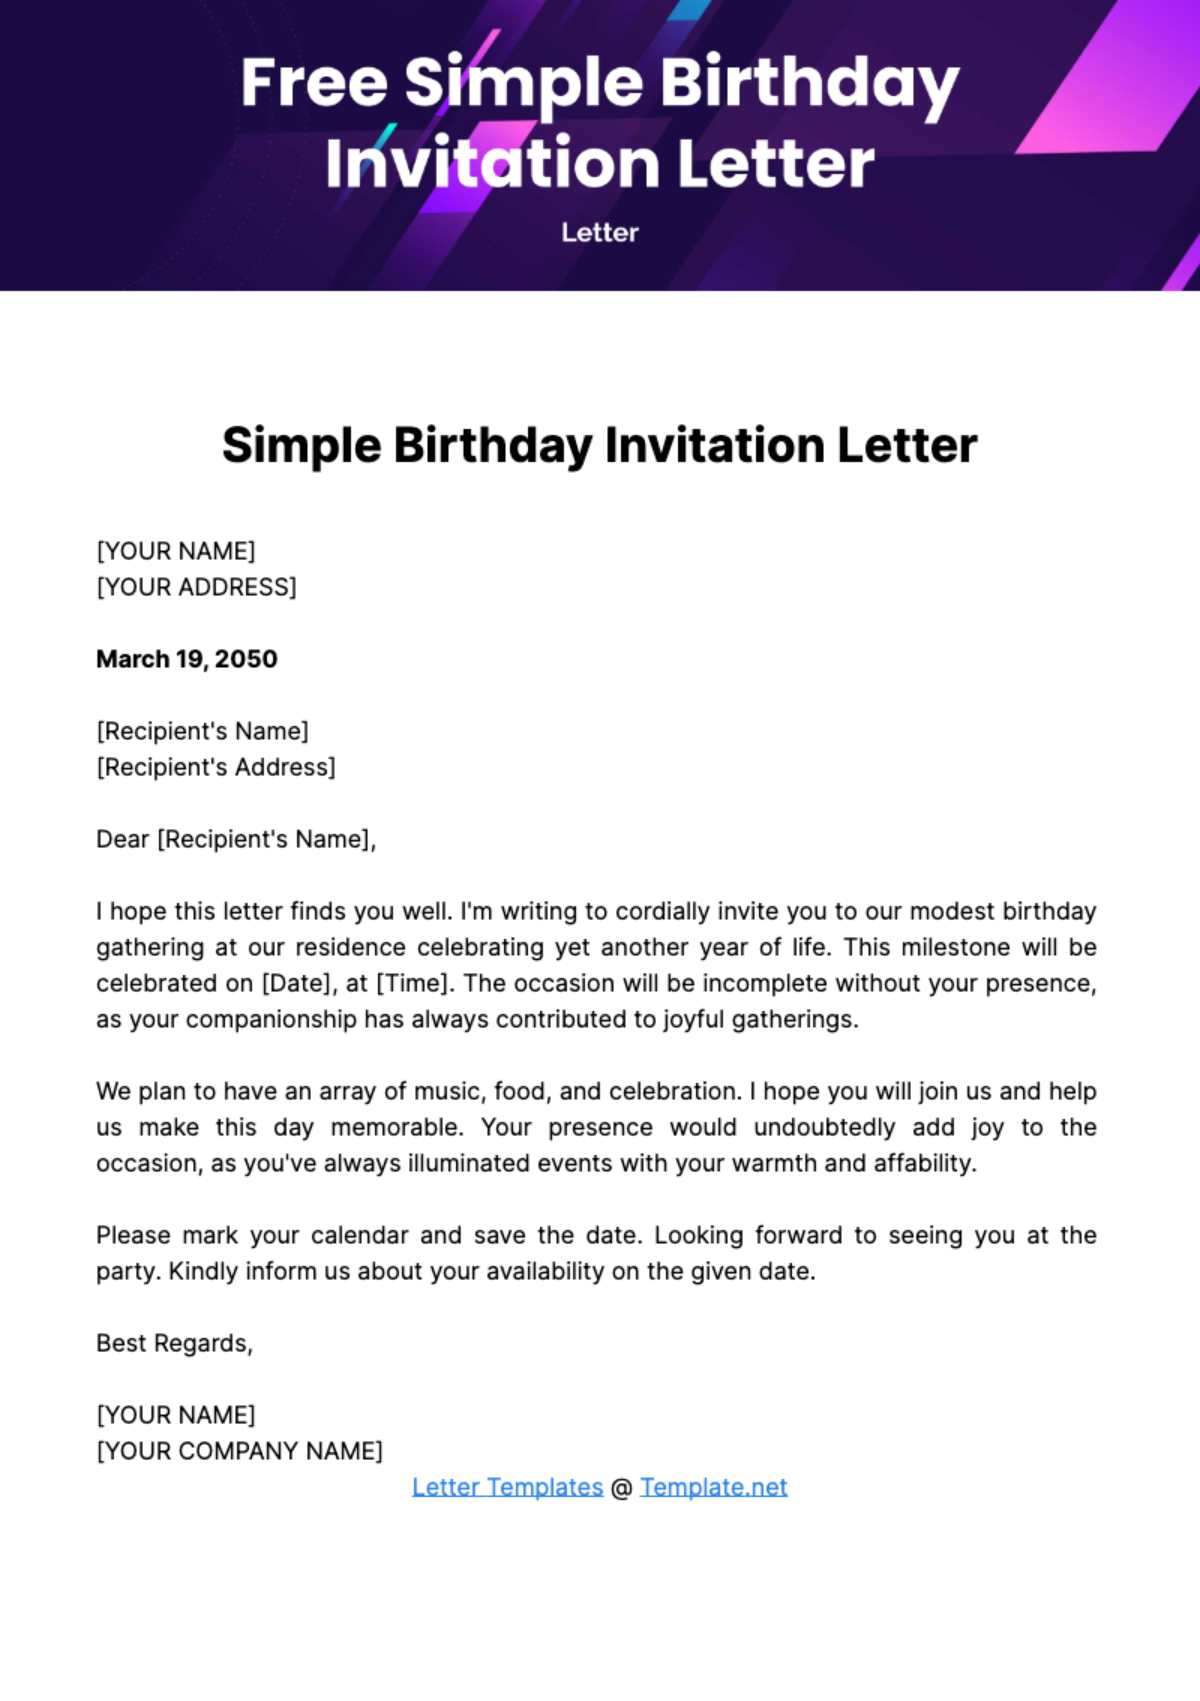 Free Simple Birthday Invitation Letter Template